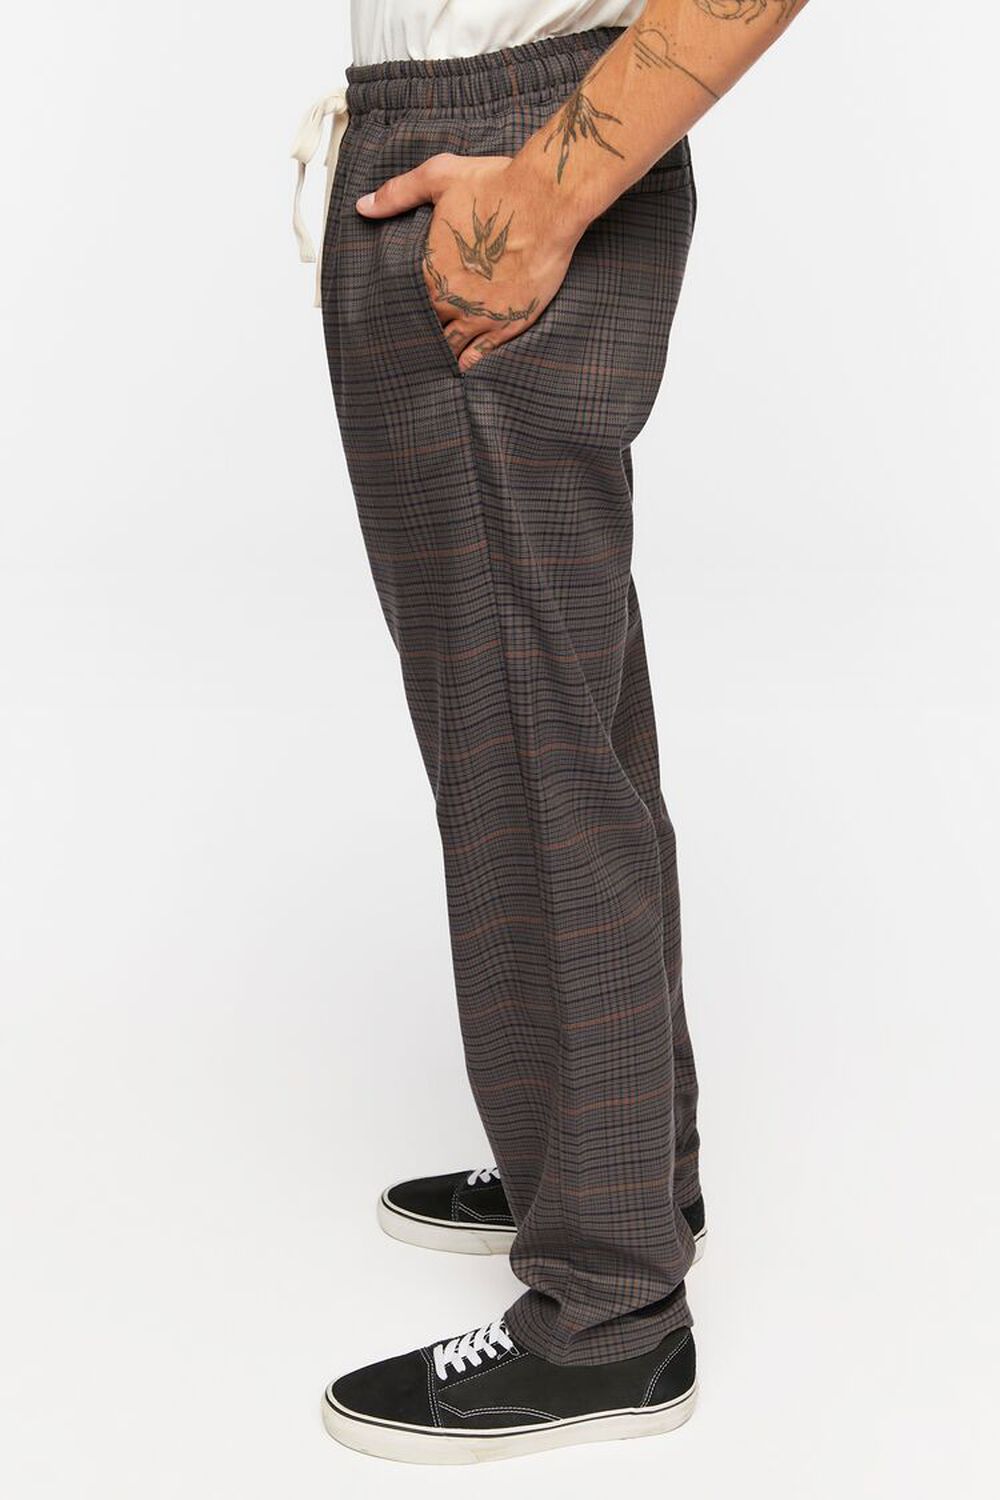 CHARCOAL/MULTI Plaid Drawstring Trousers, image 3